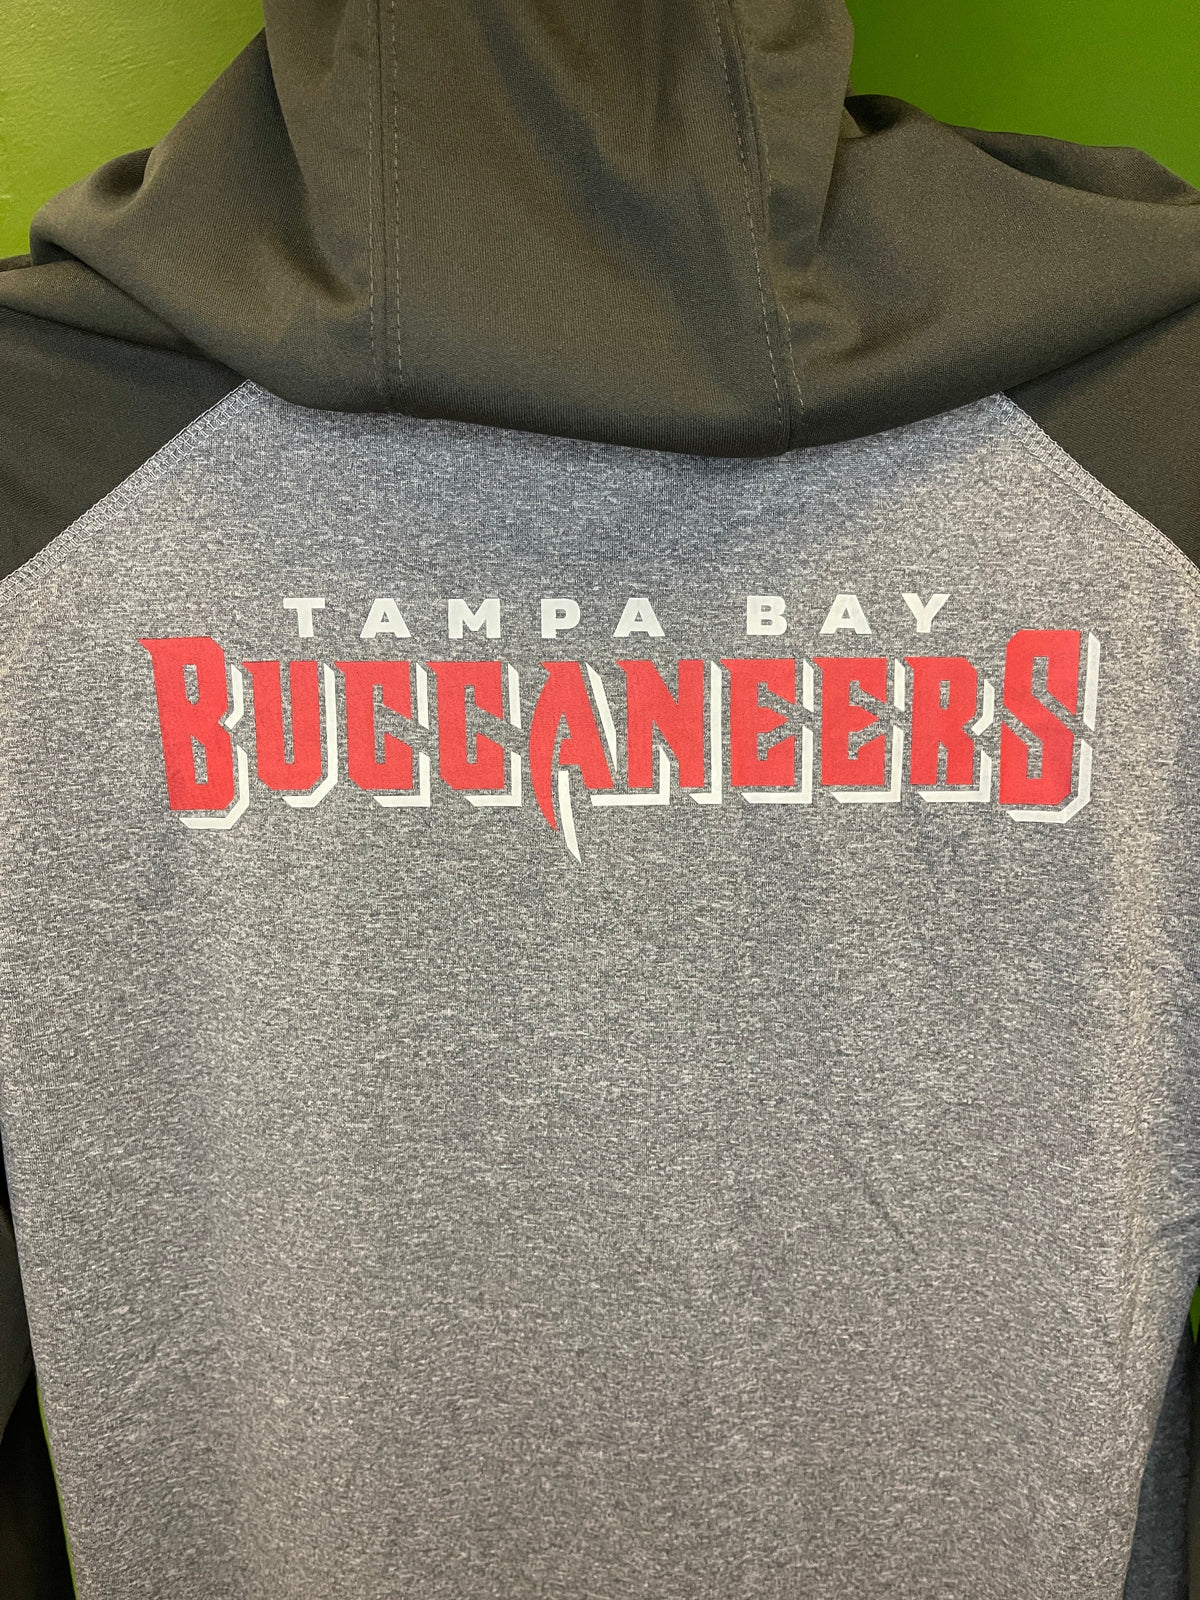 NFL Tampa Bay Buccaneers 1/4 Zip Hooded L/S T-Shirt Men's X-Large NWT